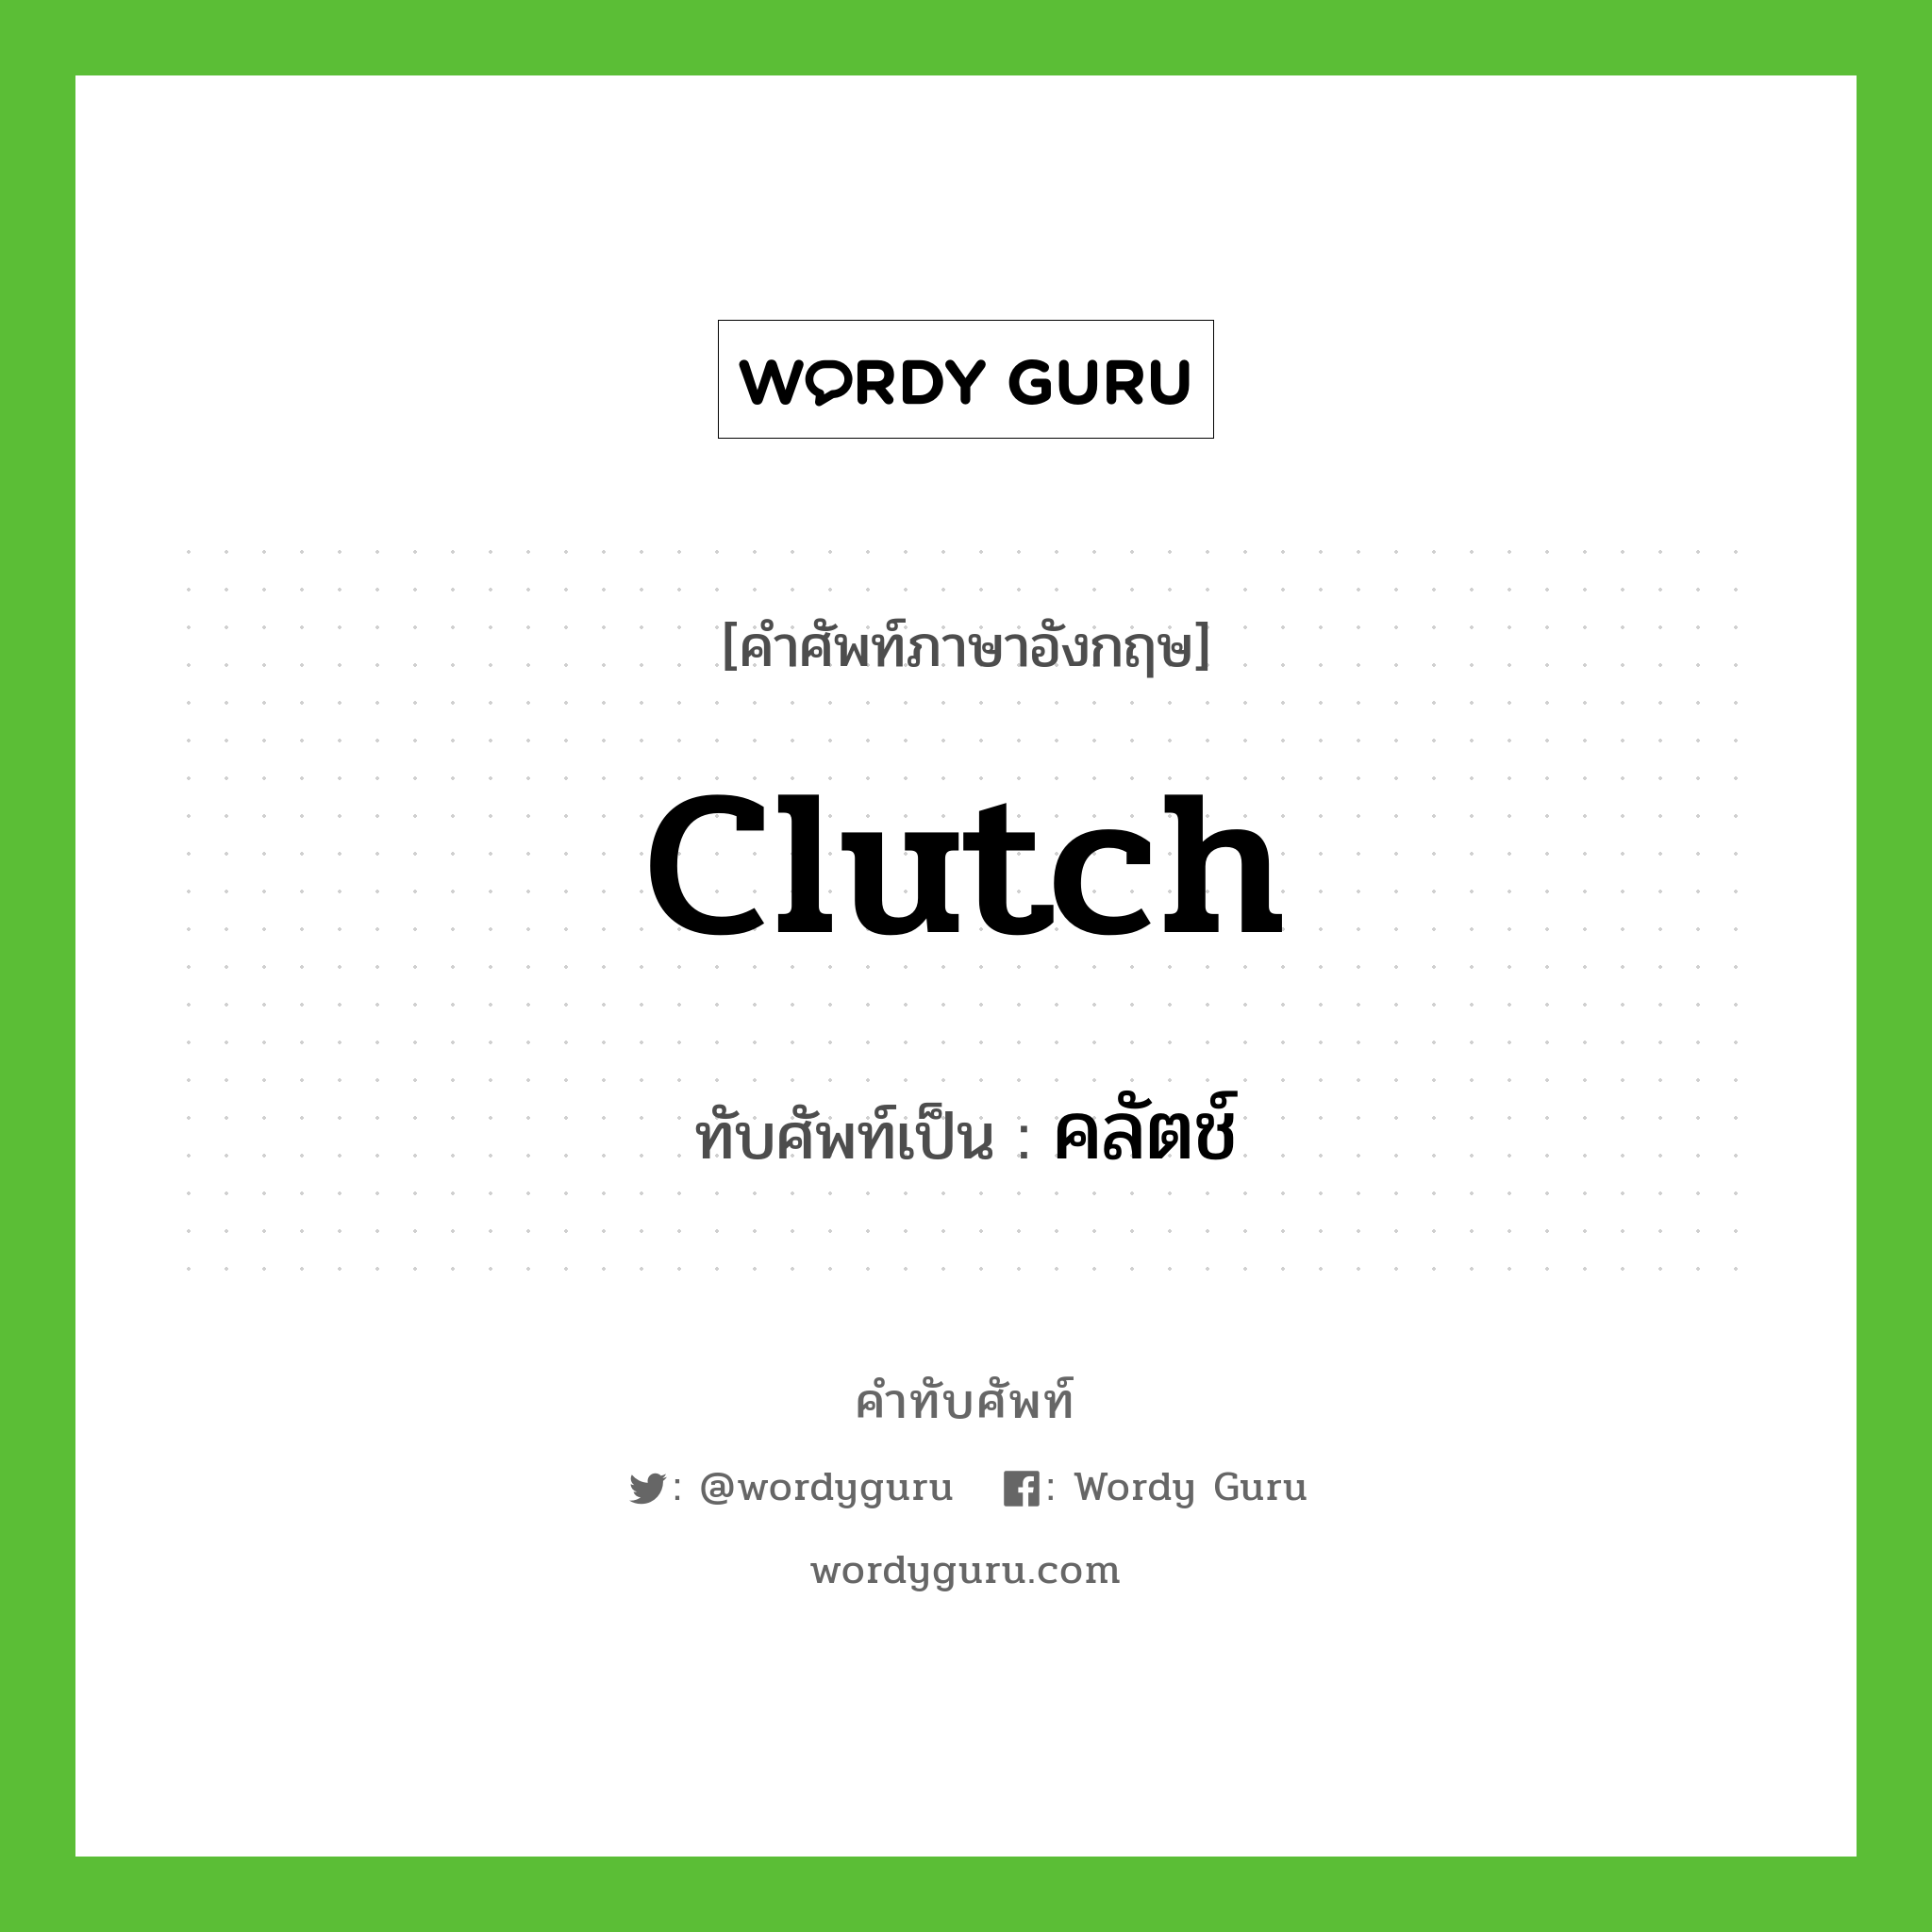 clutch เขียนเป็นคำไทยว่าอะไร?, คำศัพท์ภาษาอังกฤษ clutch ทับศัพท์เป็น คลัตช์